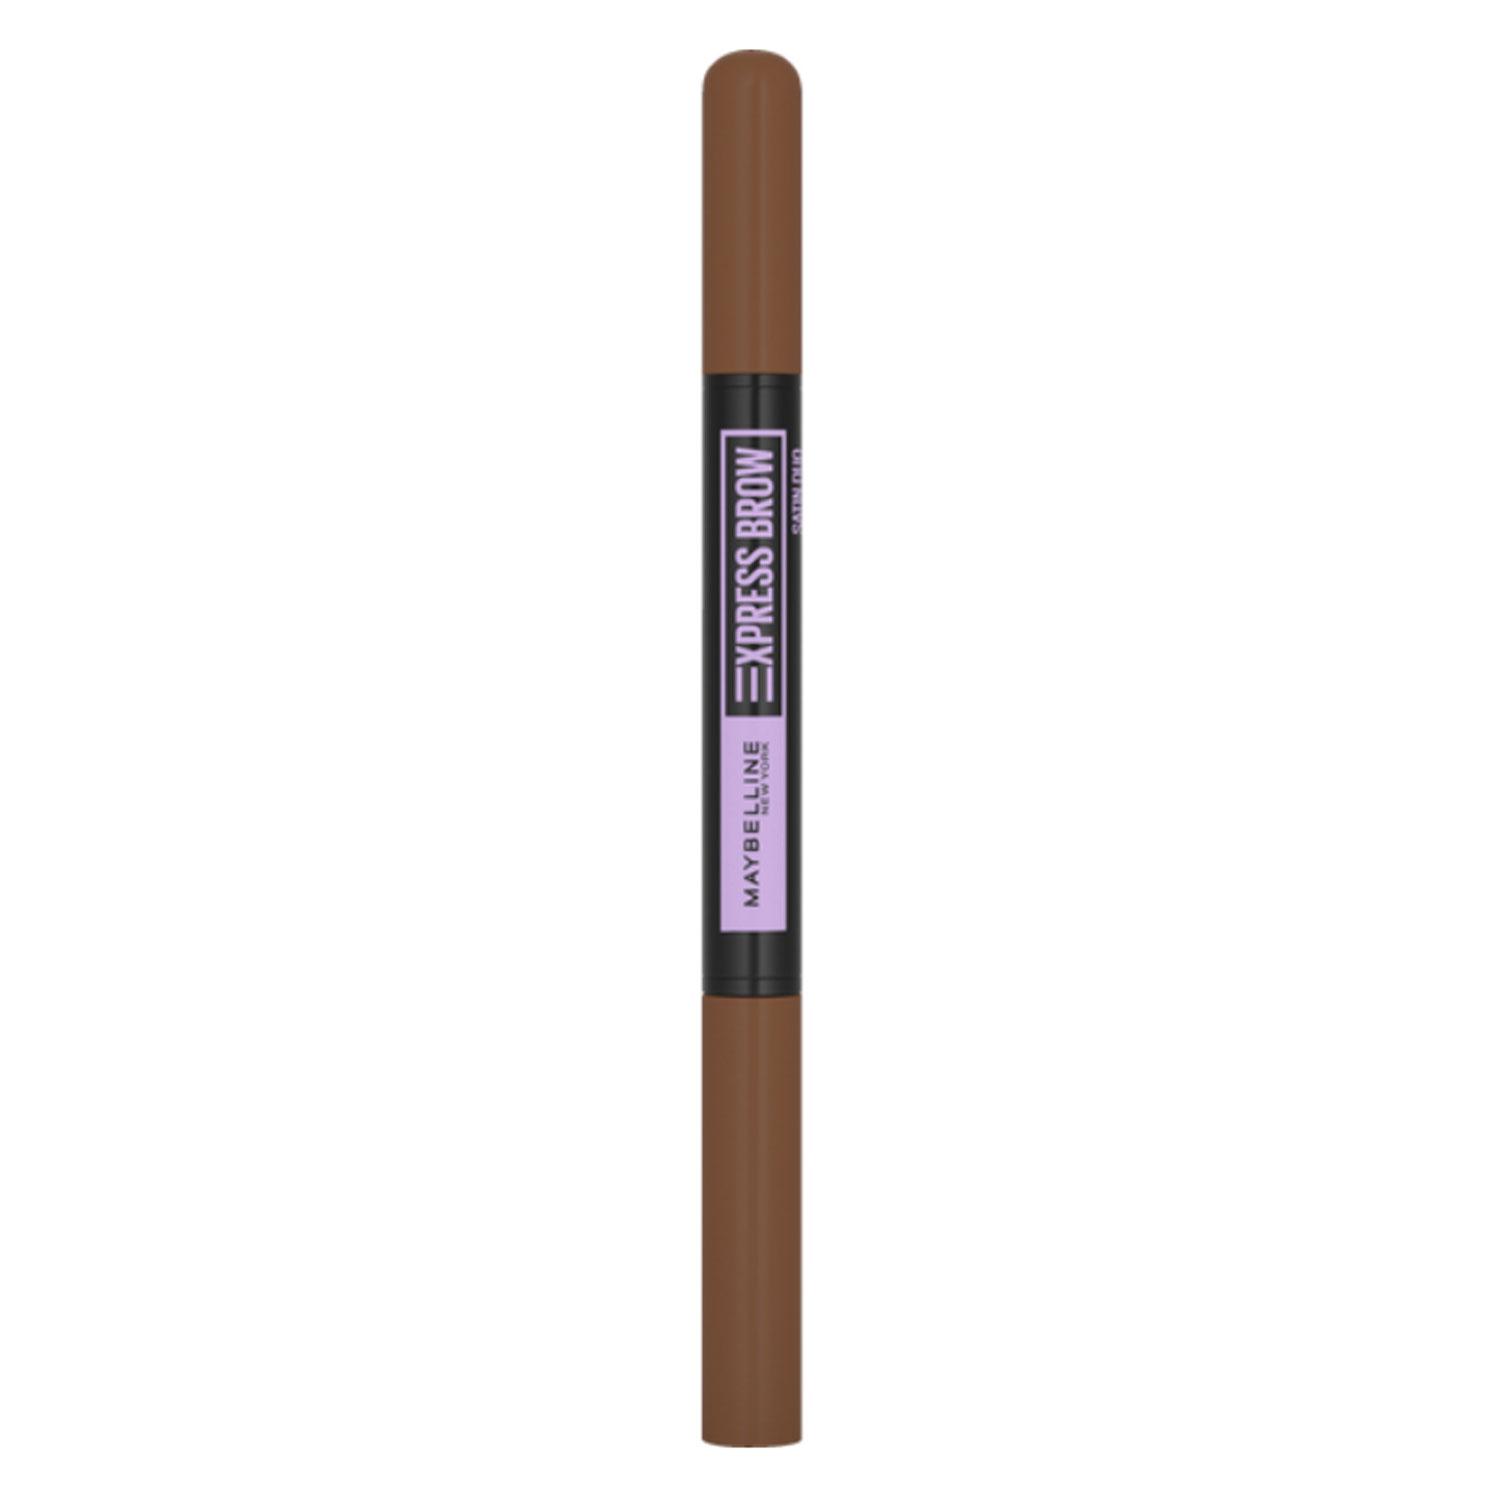 Maybelline NY Brows - Express Brow Satin Duo Eyebrow Pencil and Powder No. 02 Medium Brown